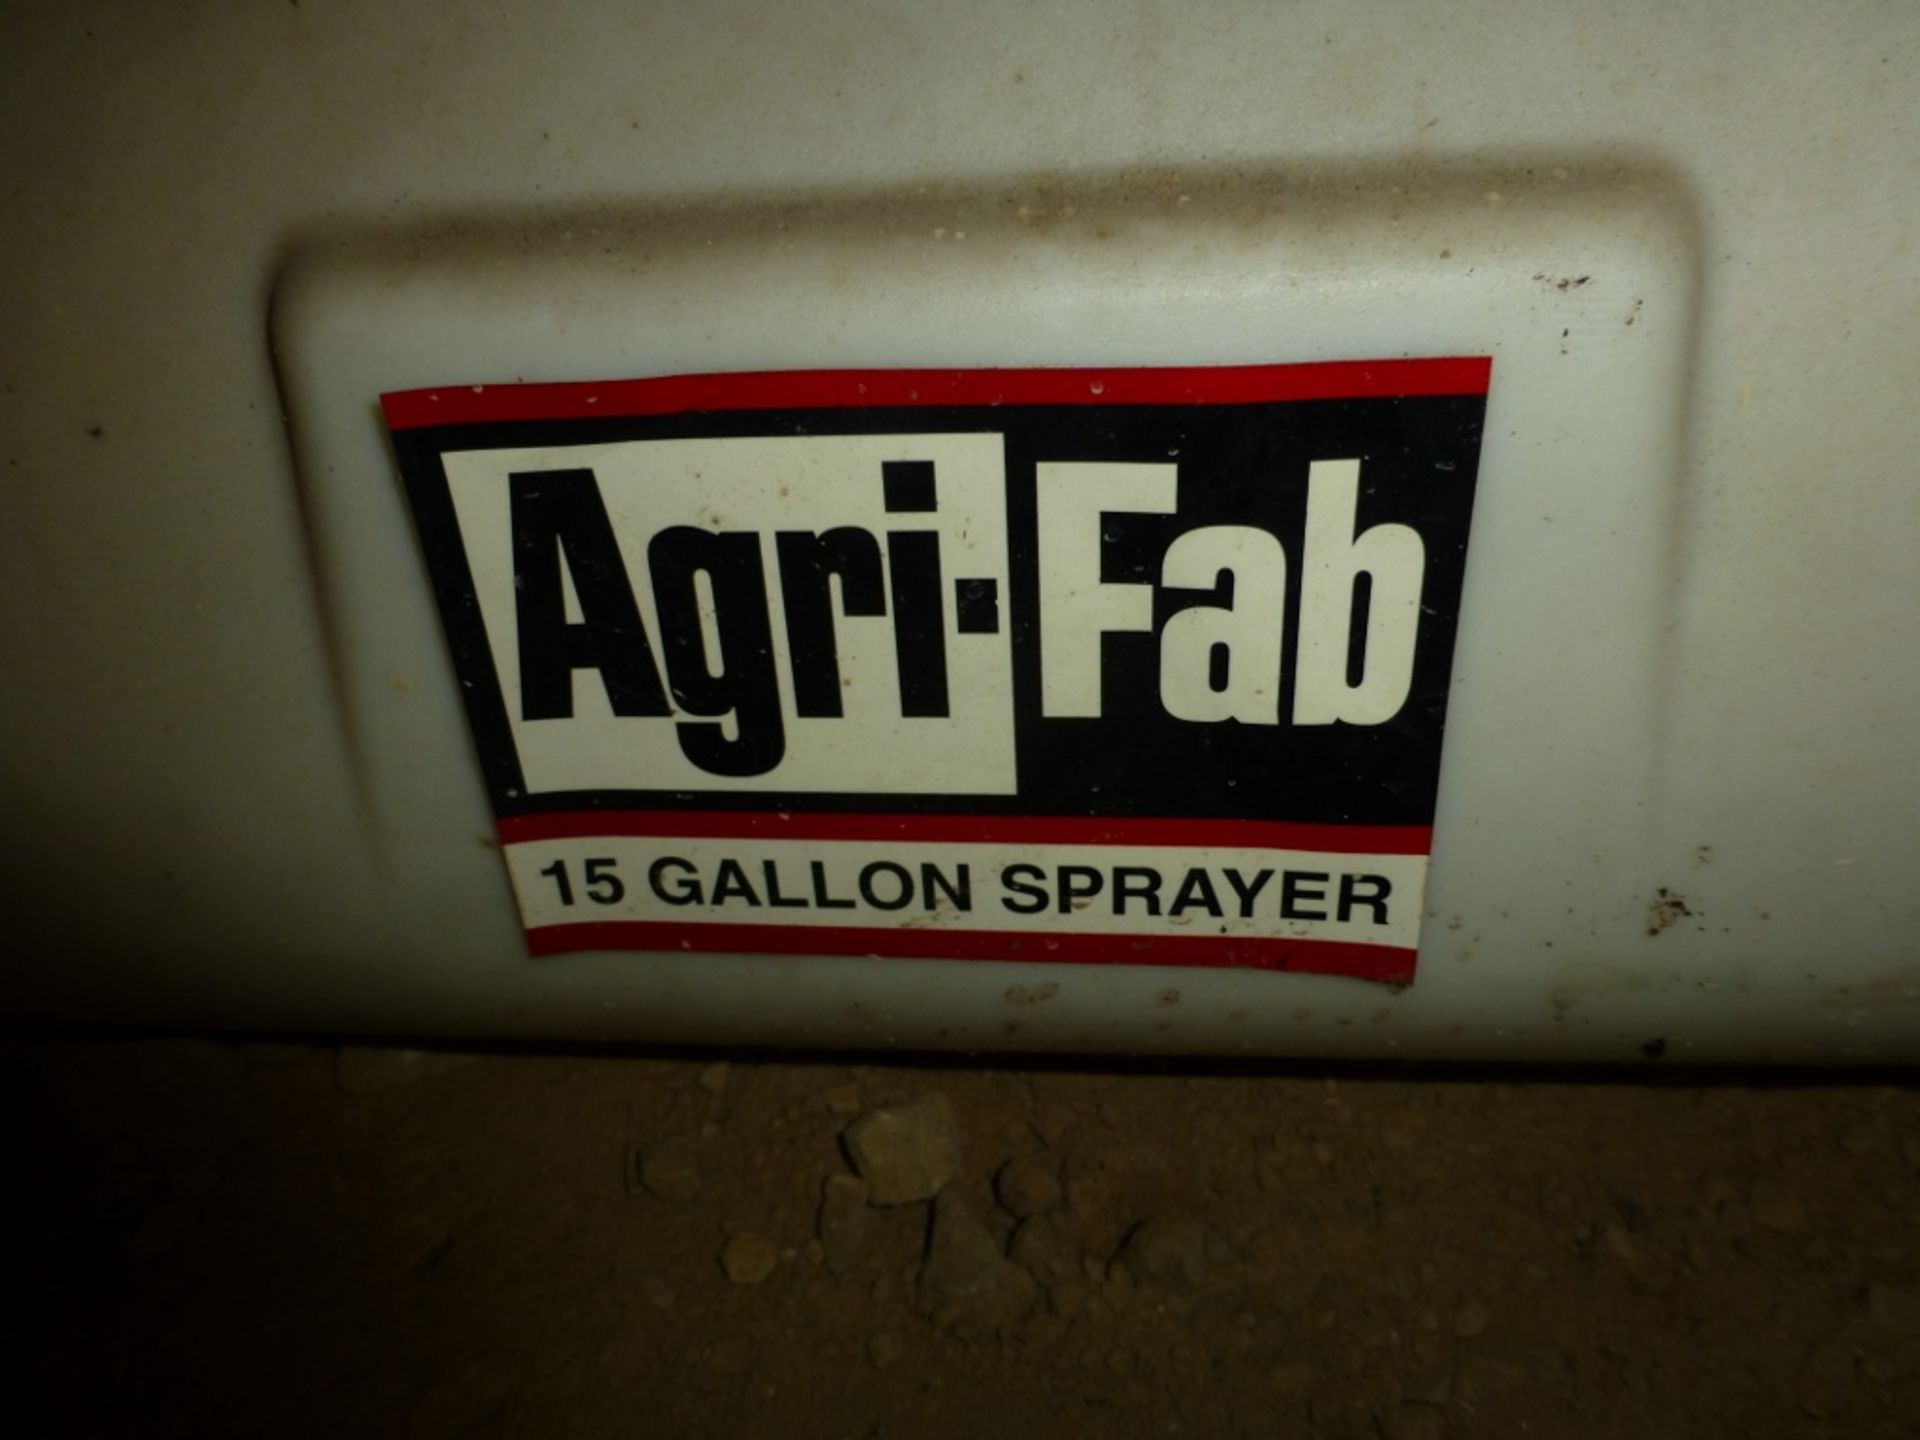 Agri-Fab 15 gal sprayer - Image 2 of 3